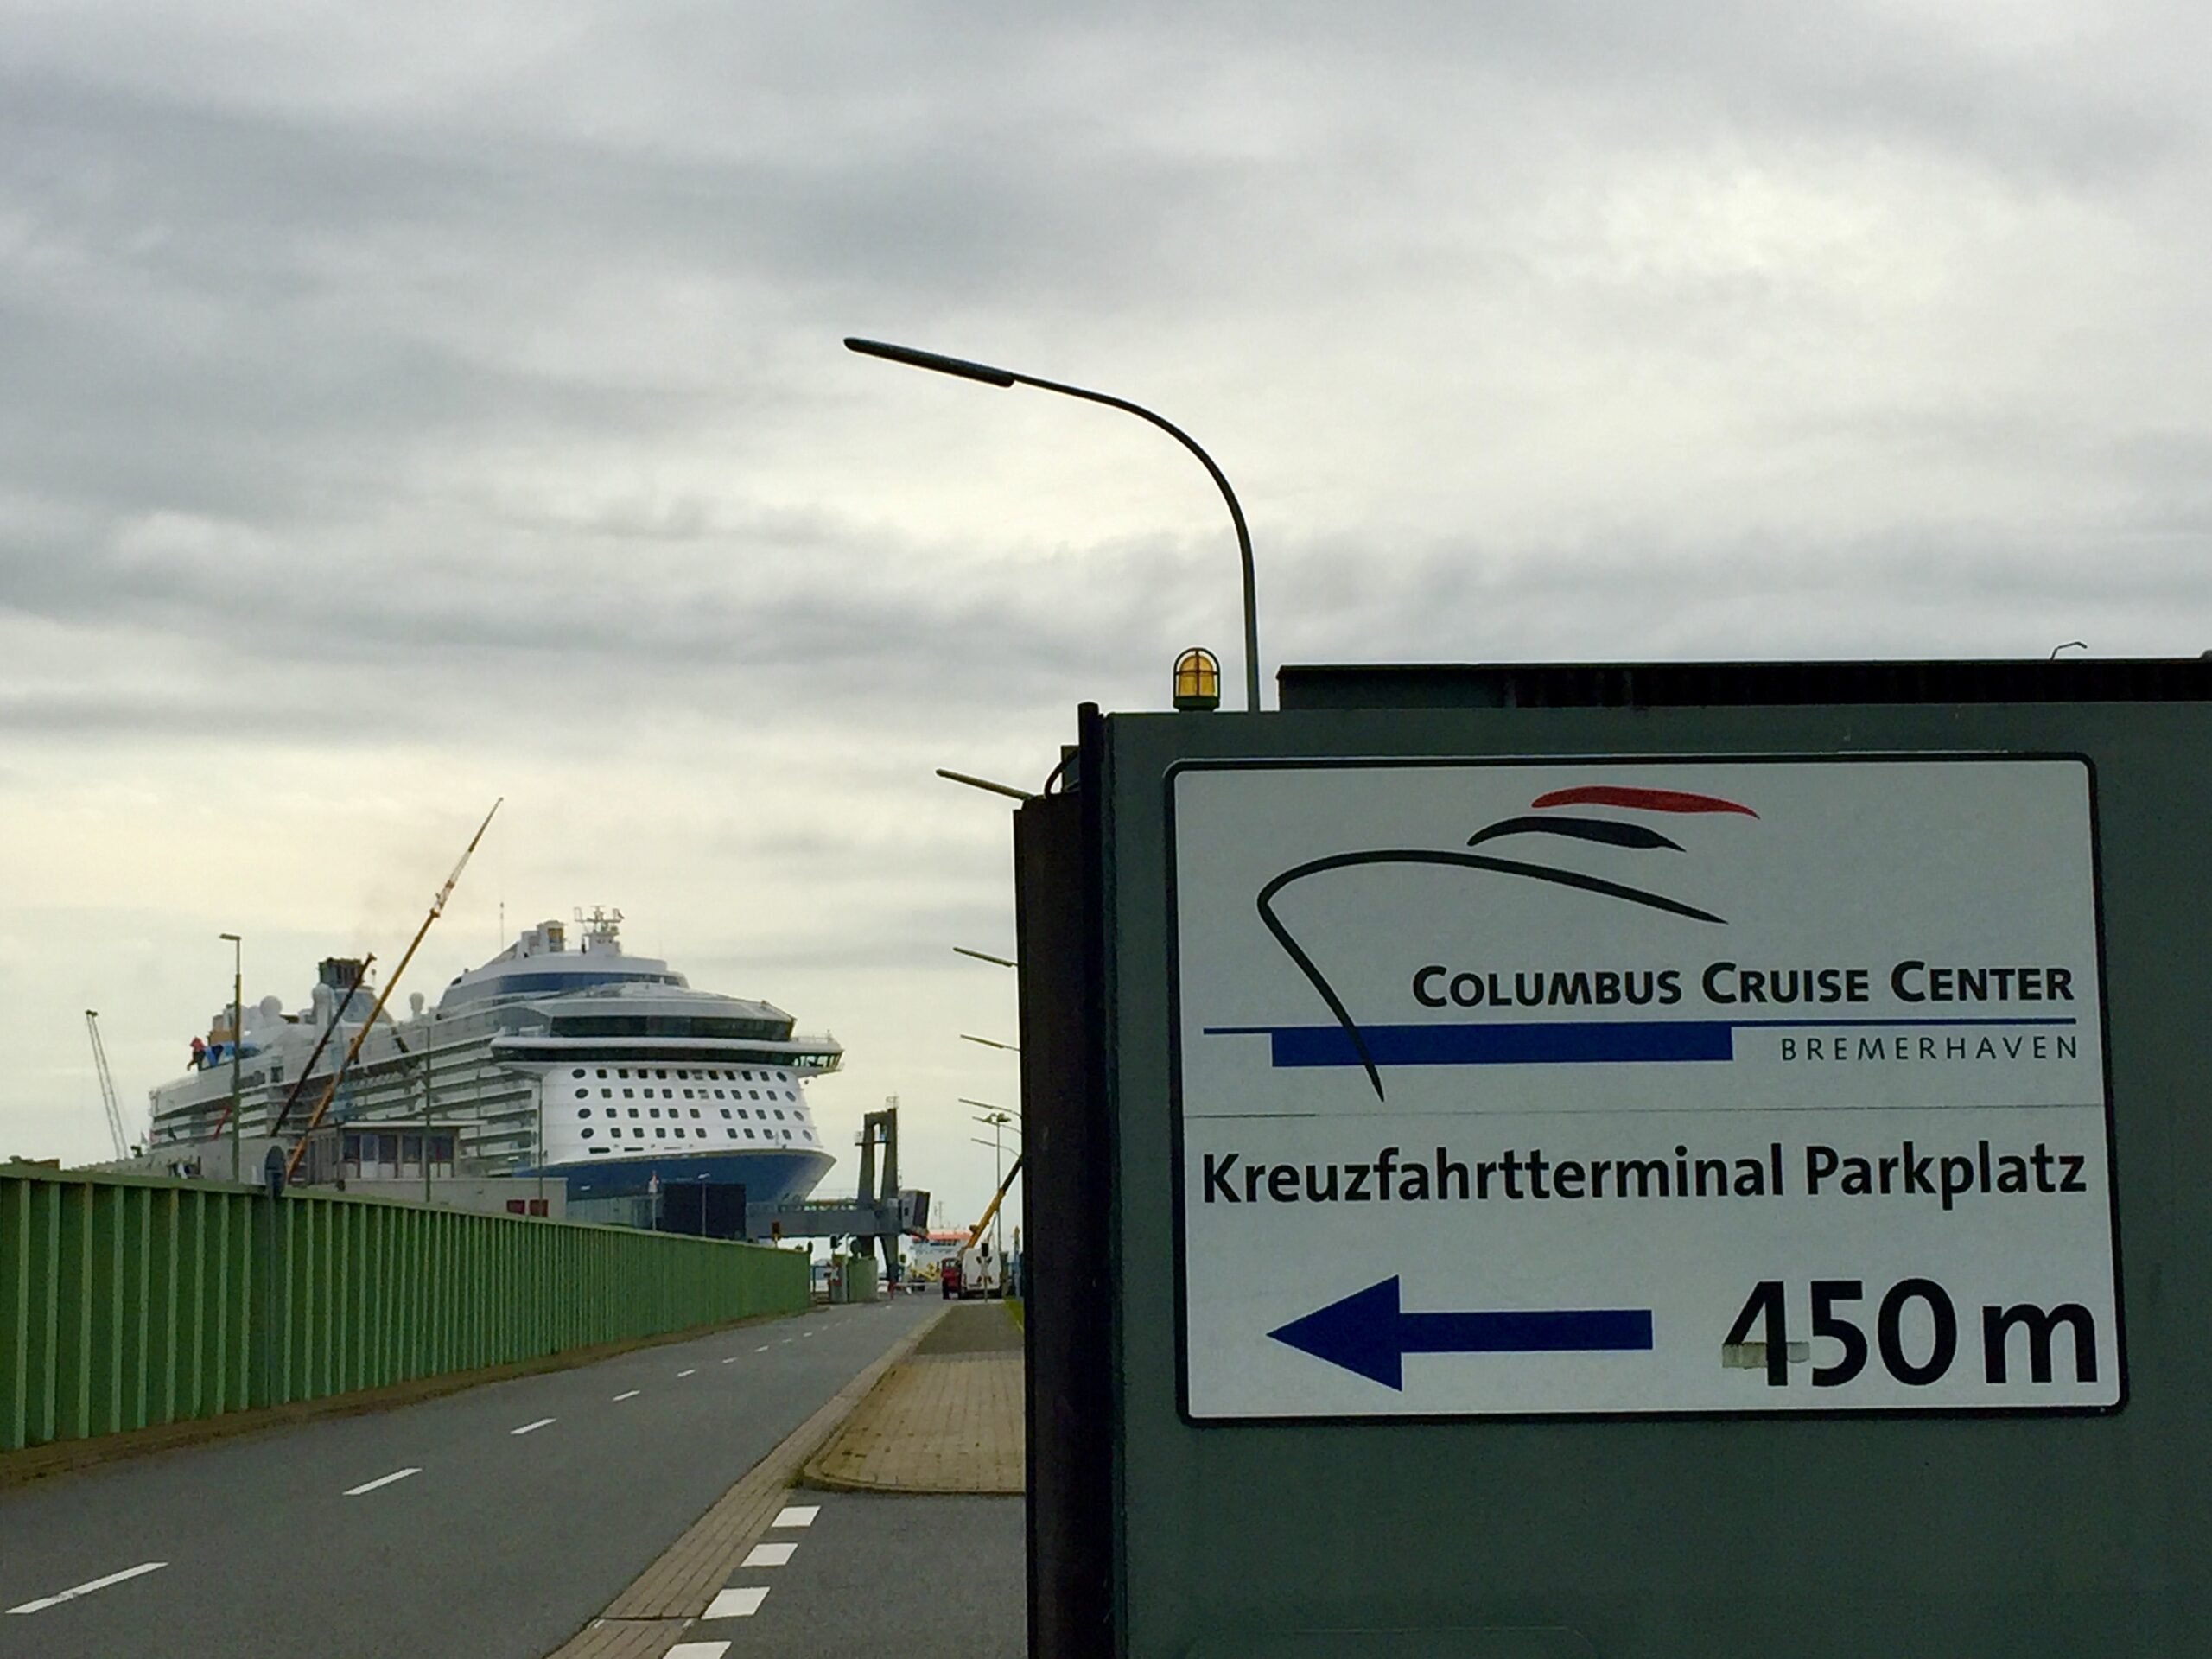 Columbus Cruise Center Bremerhaven